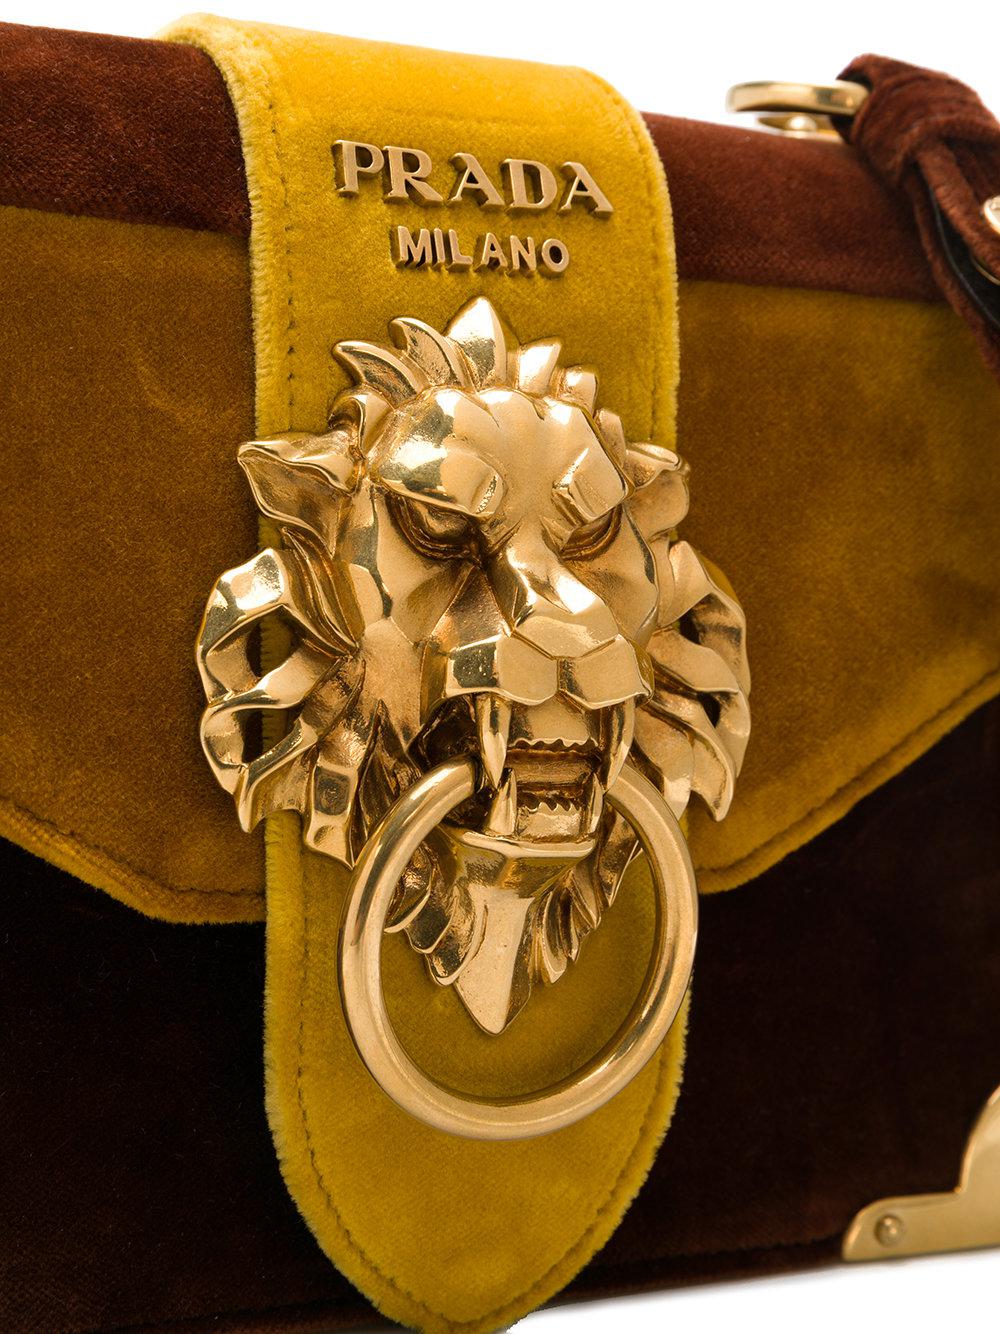 prada milano lion purse